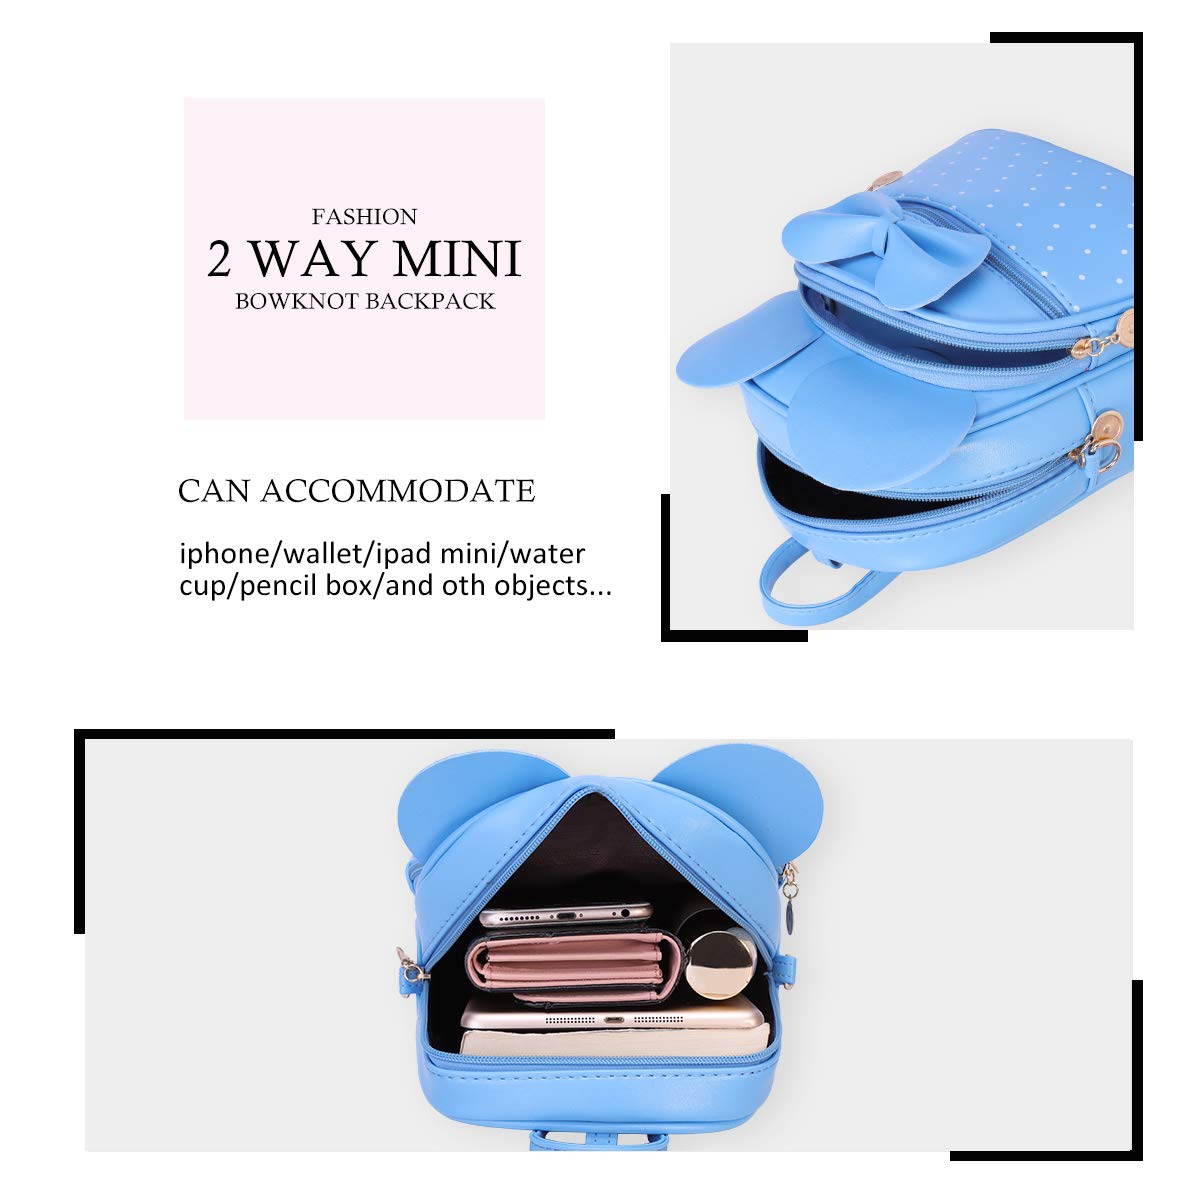 Girls Bowknot Polka Dot Cute Mini Backpack Small Daypacks Convertible Shoulder Bag Purse for Women